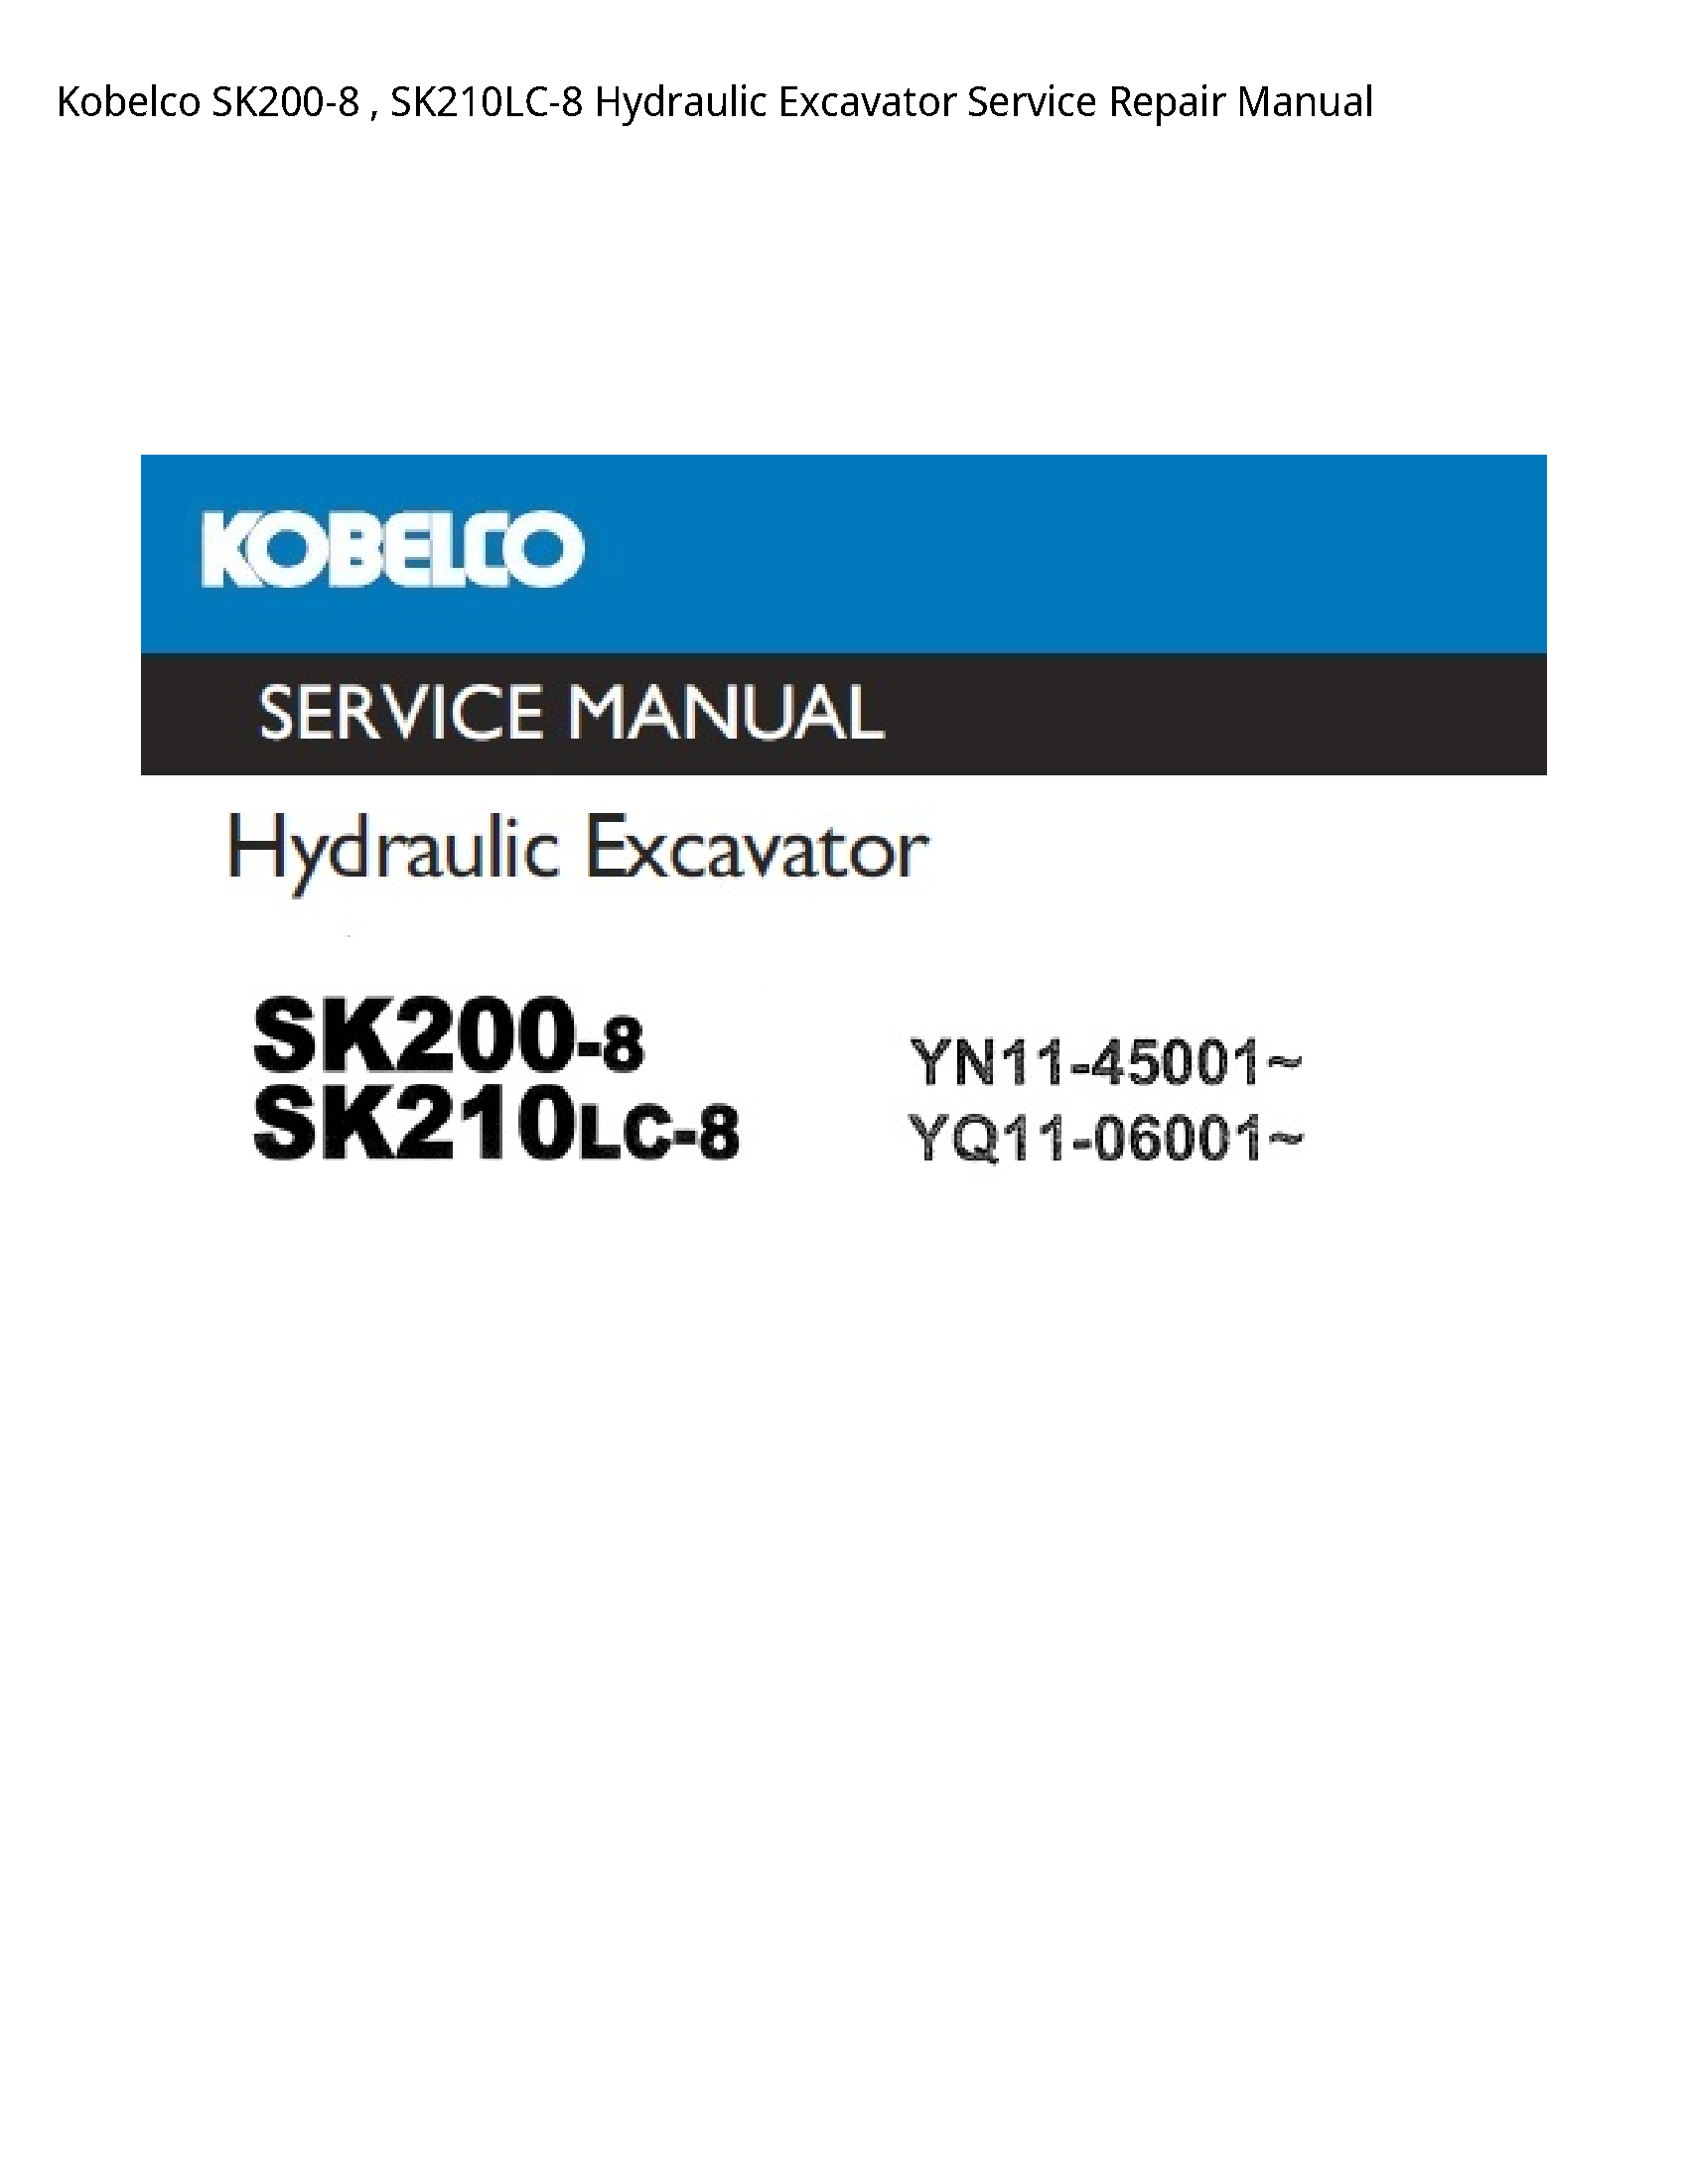 Kobelco SK200-8 Hydraulic Excavator manual